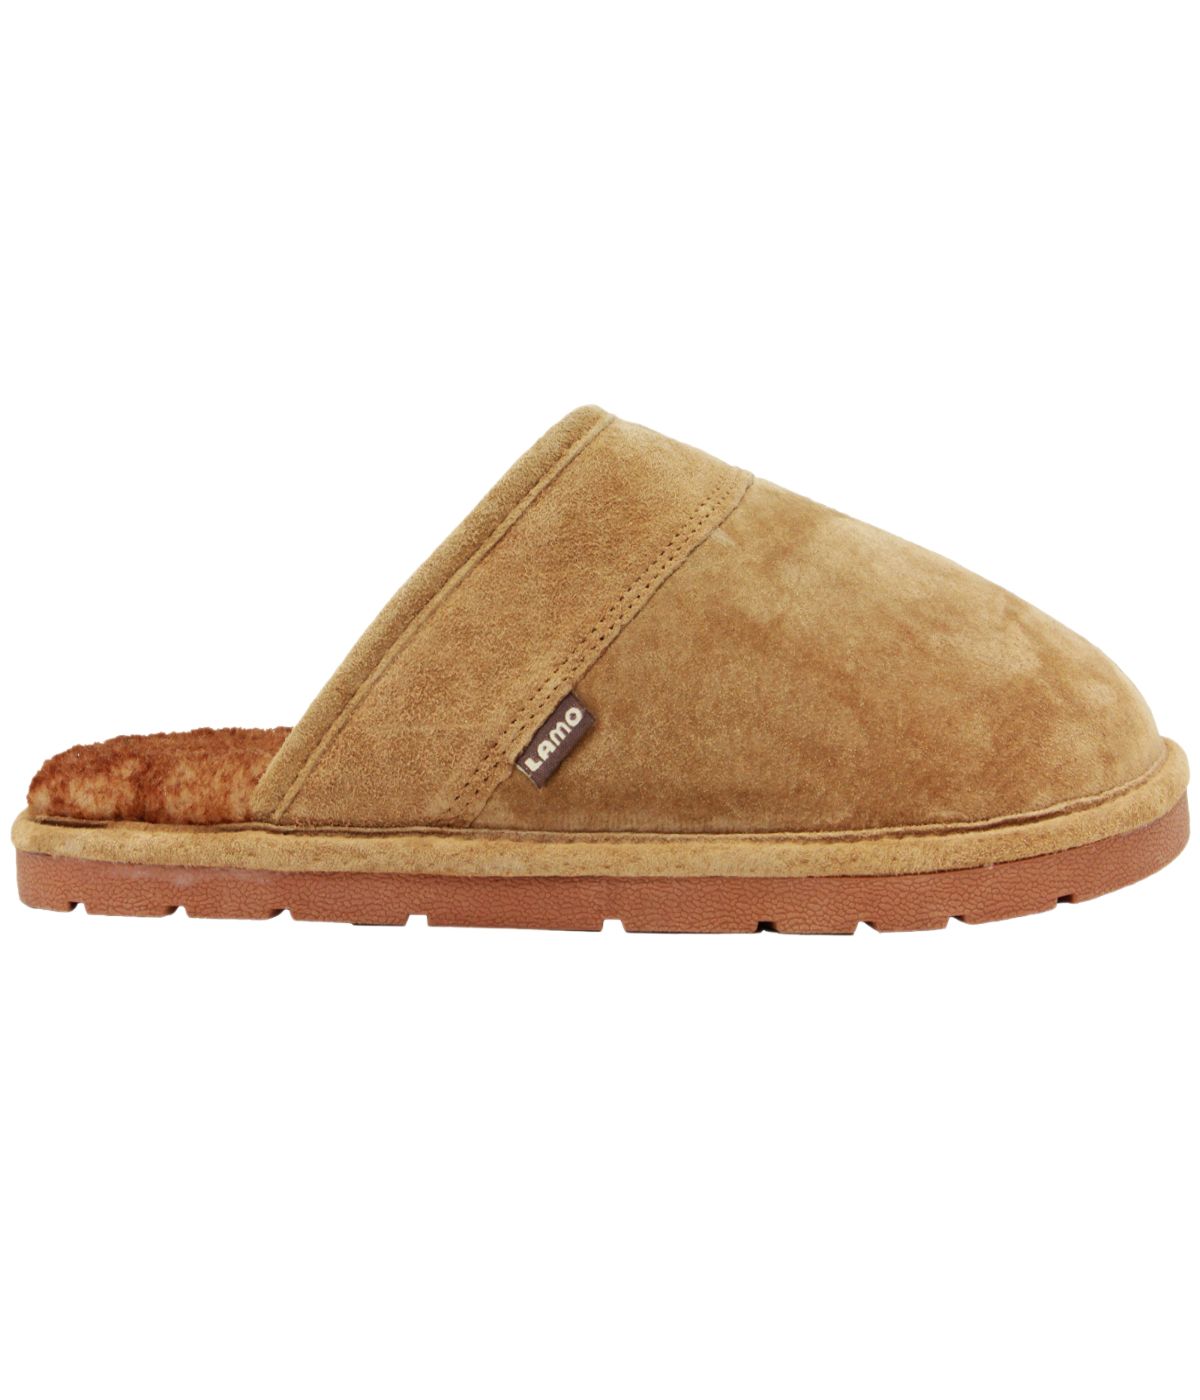 Men's suede scuff slipper with fur lining Chestnut